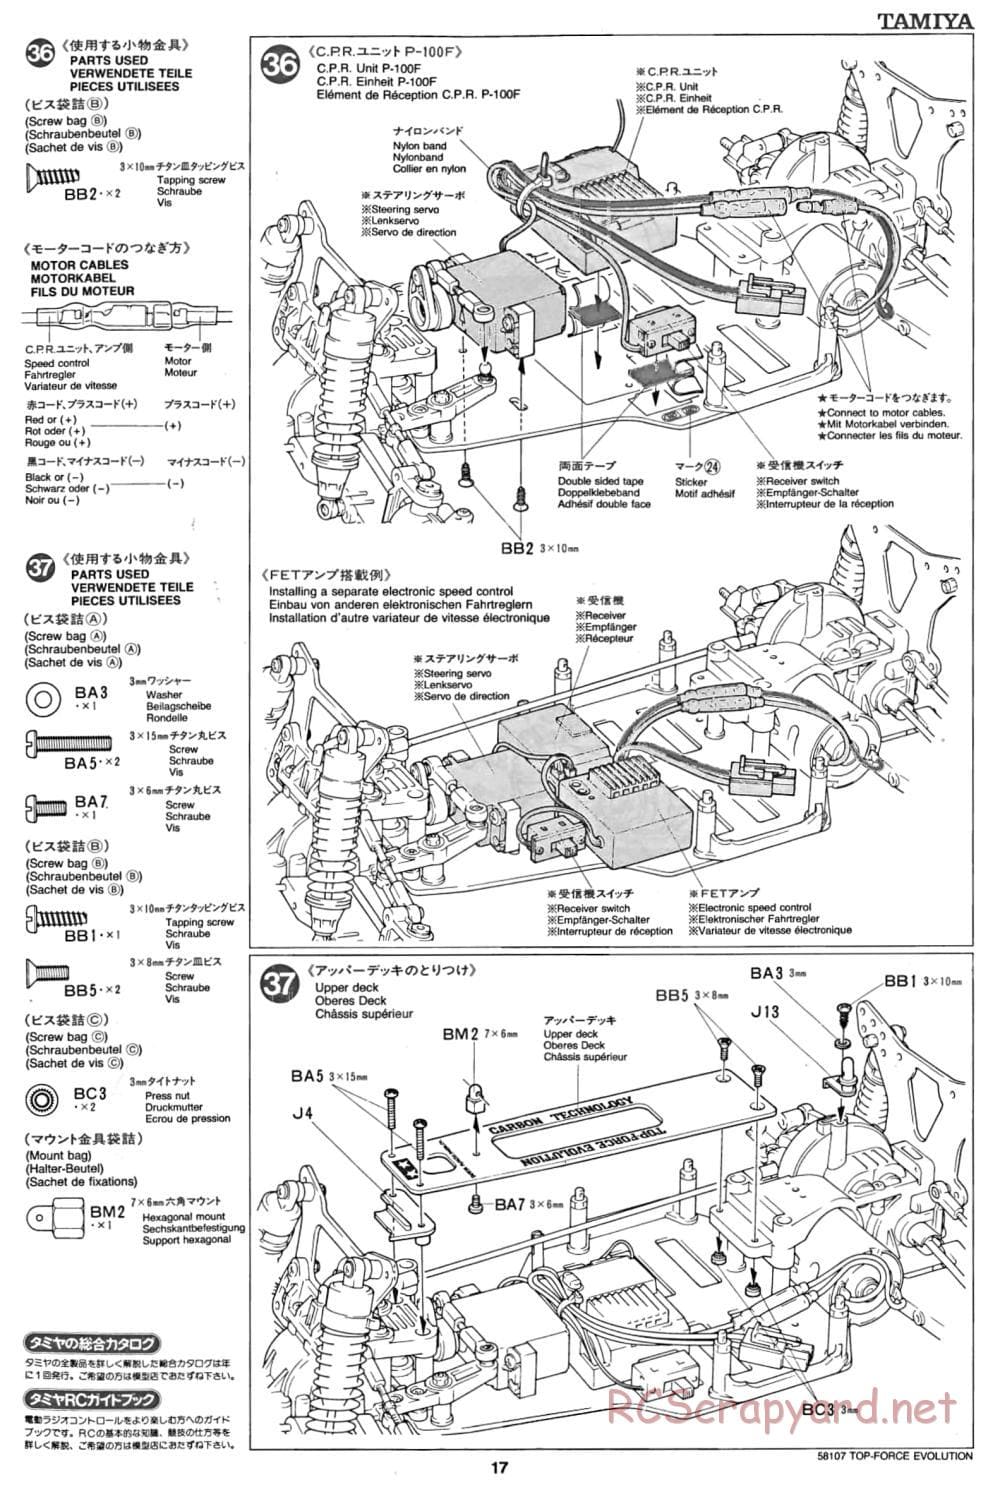 Tamiya - Top Force Evolution Chassis - Manual - Page 17